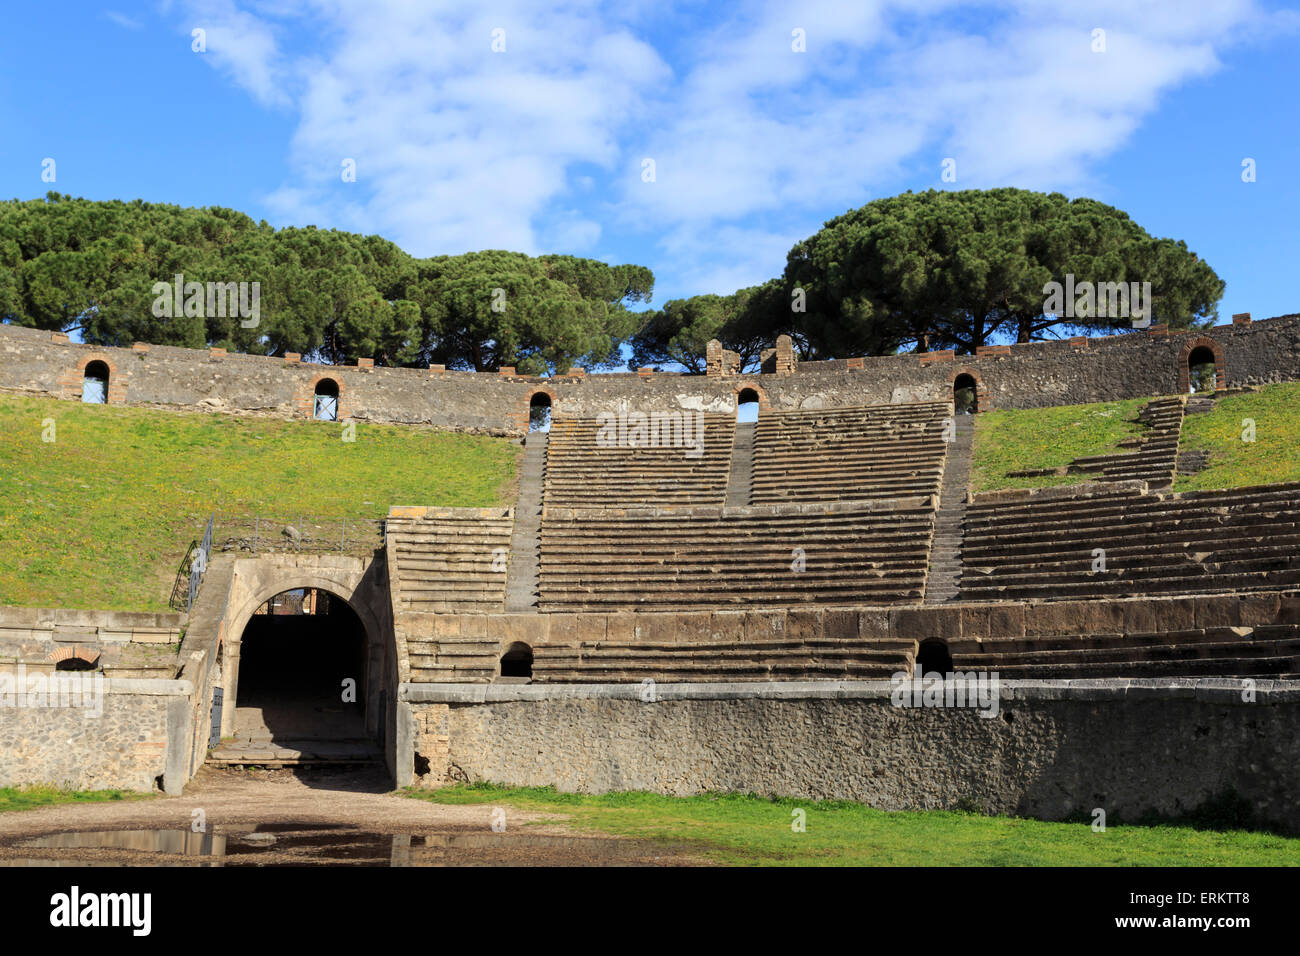 Auditorium und Eingang Tor, Amphitheater, römische Ruinen von Pompeji, UNESCO World Heritage Site, Kampanien, Italien, Europa Stockfoto